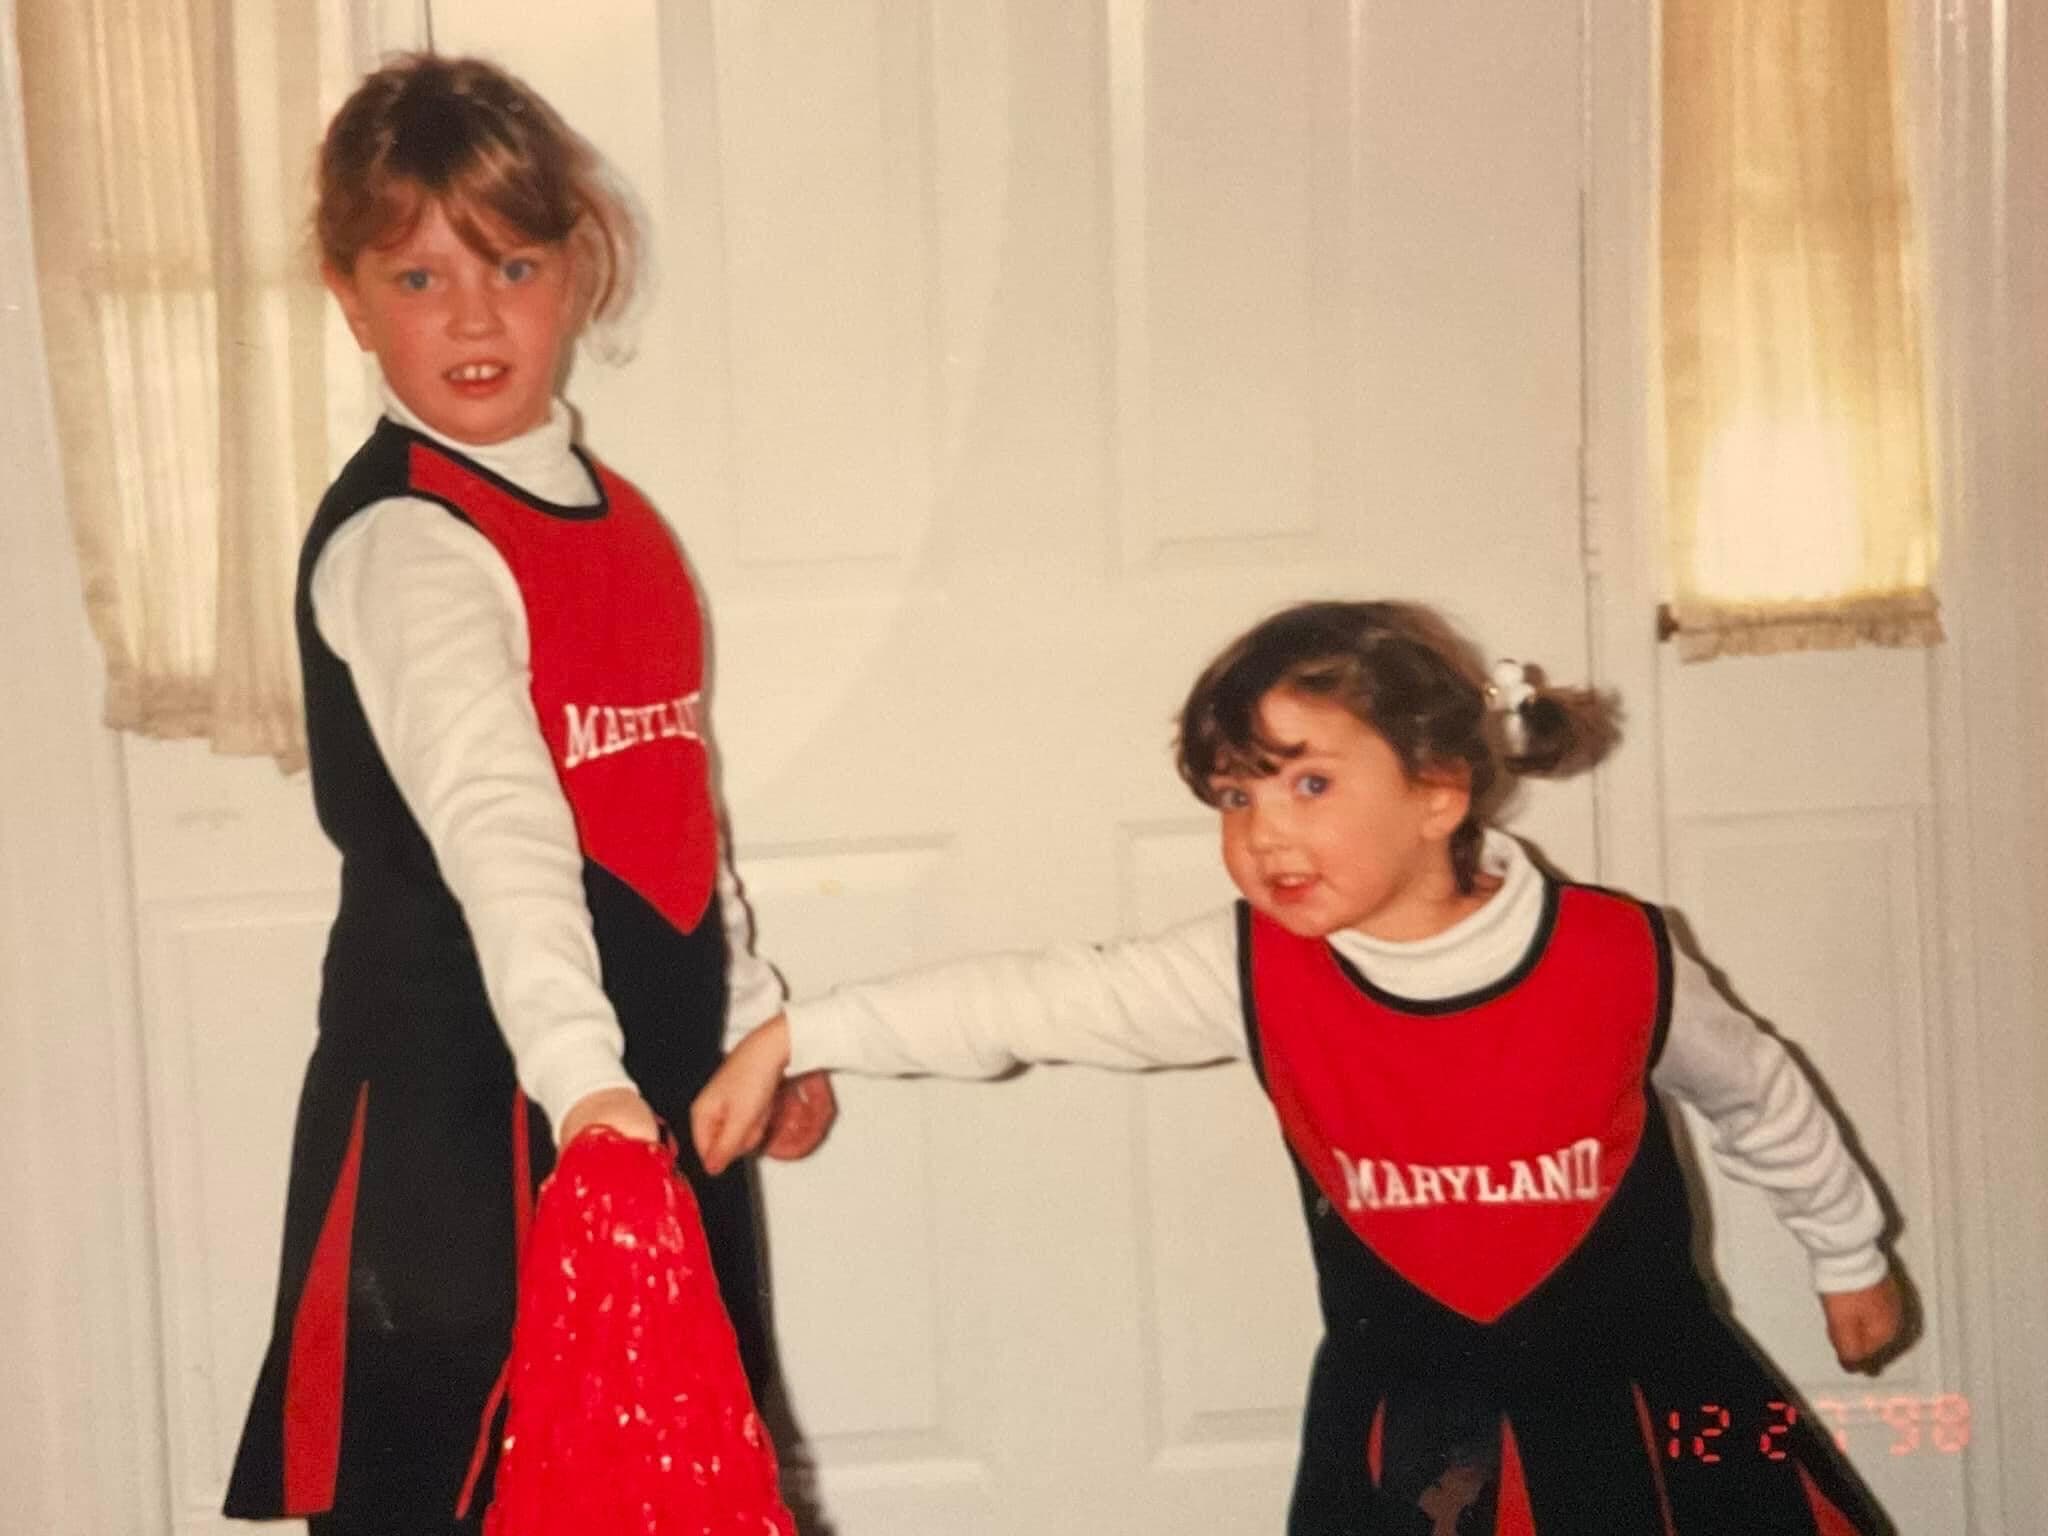 Stephanie Groff '13 and Hayley Groff '16 dress up as Maryland cheerleaders